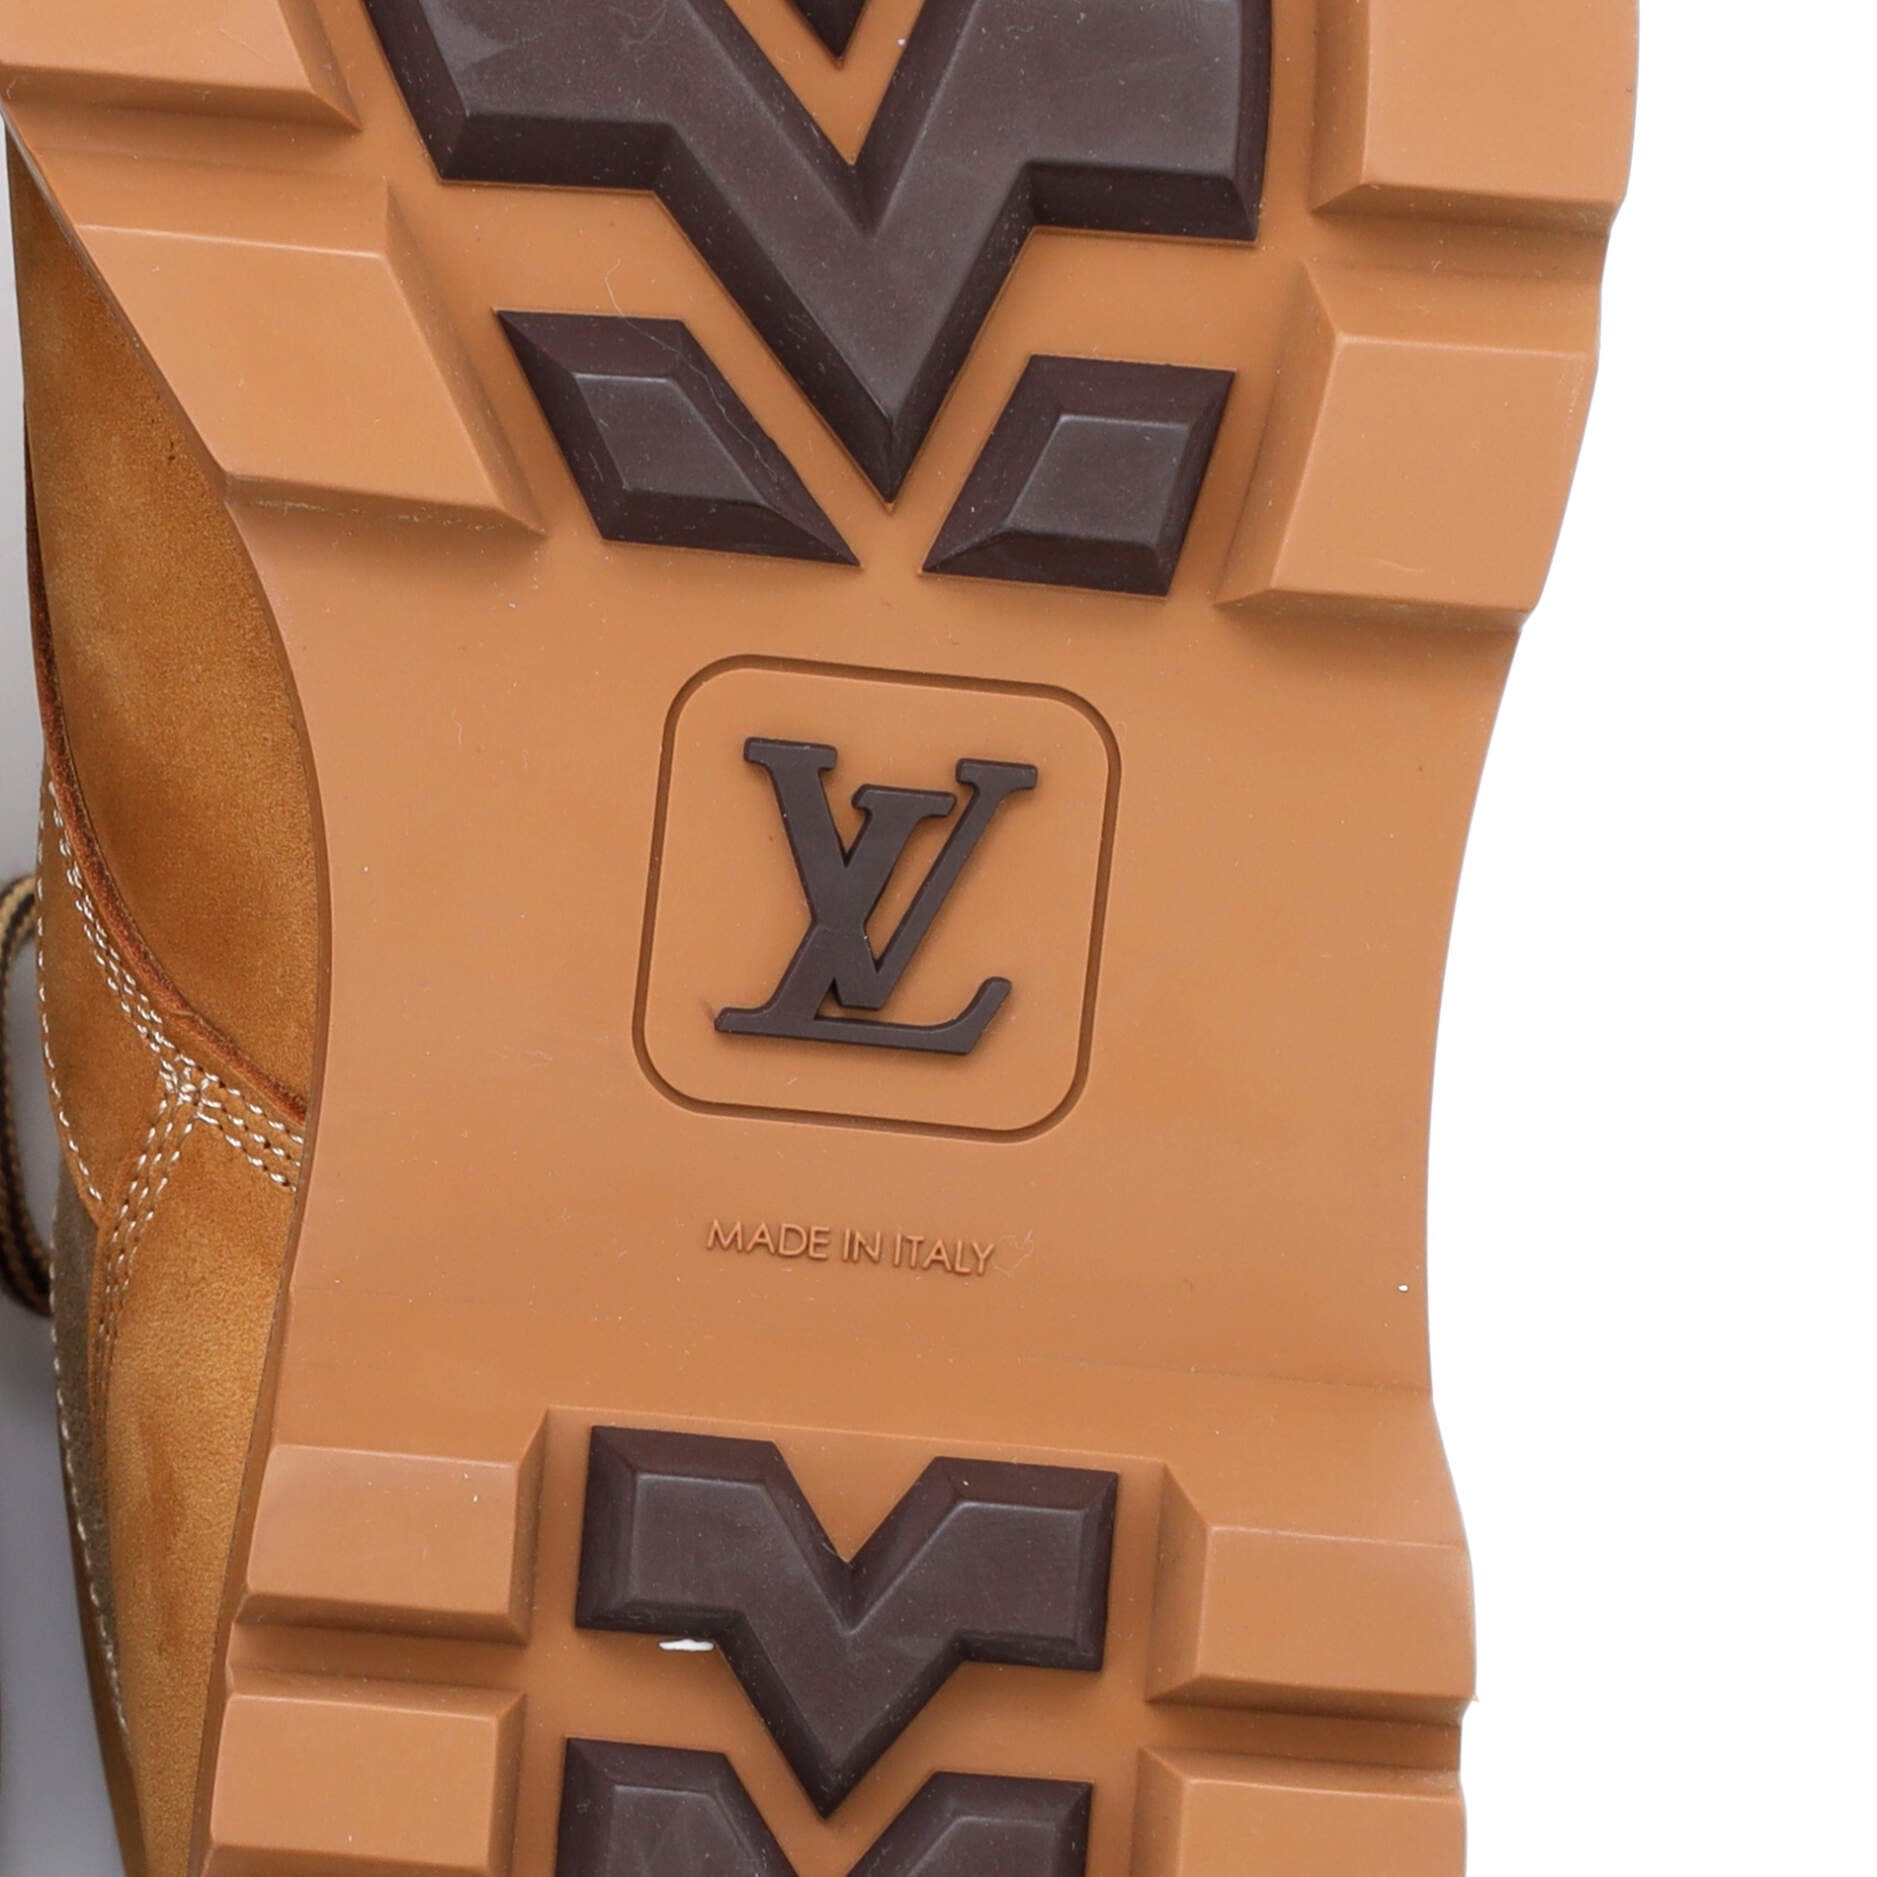 Louis Vuitton Men's Oberkampf Ankle Boots Alps Patches Canvas with